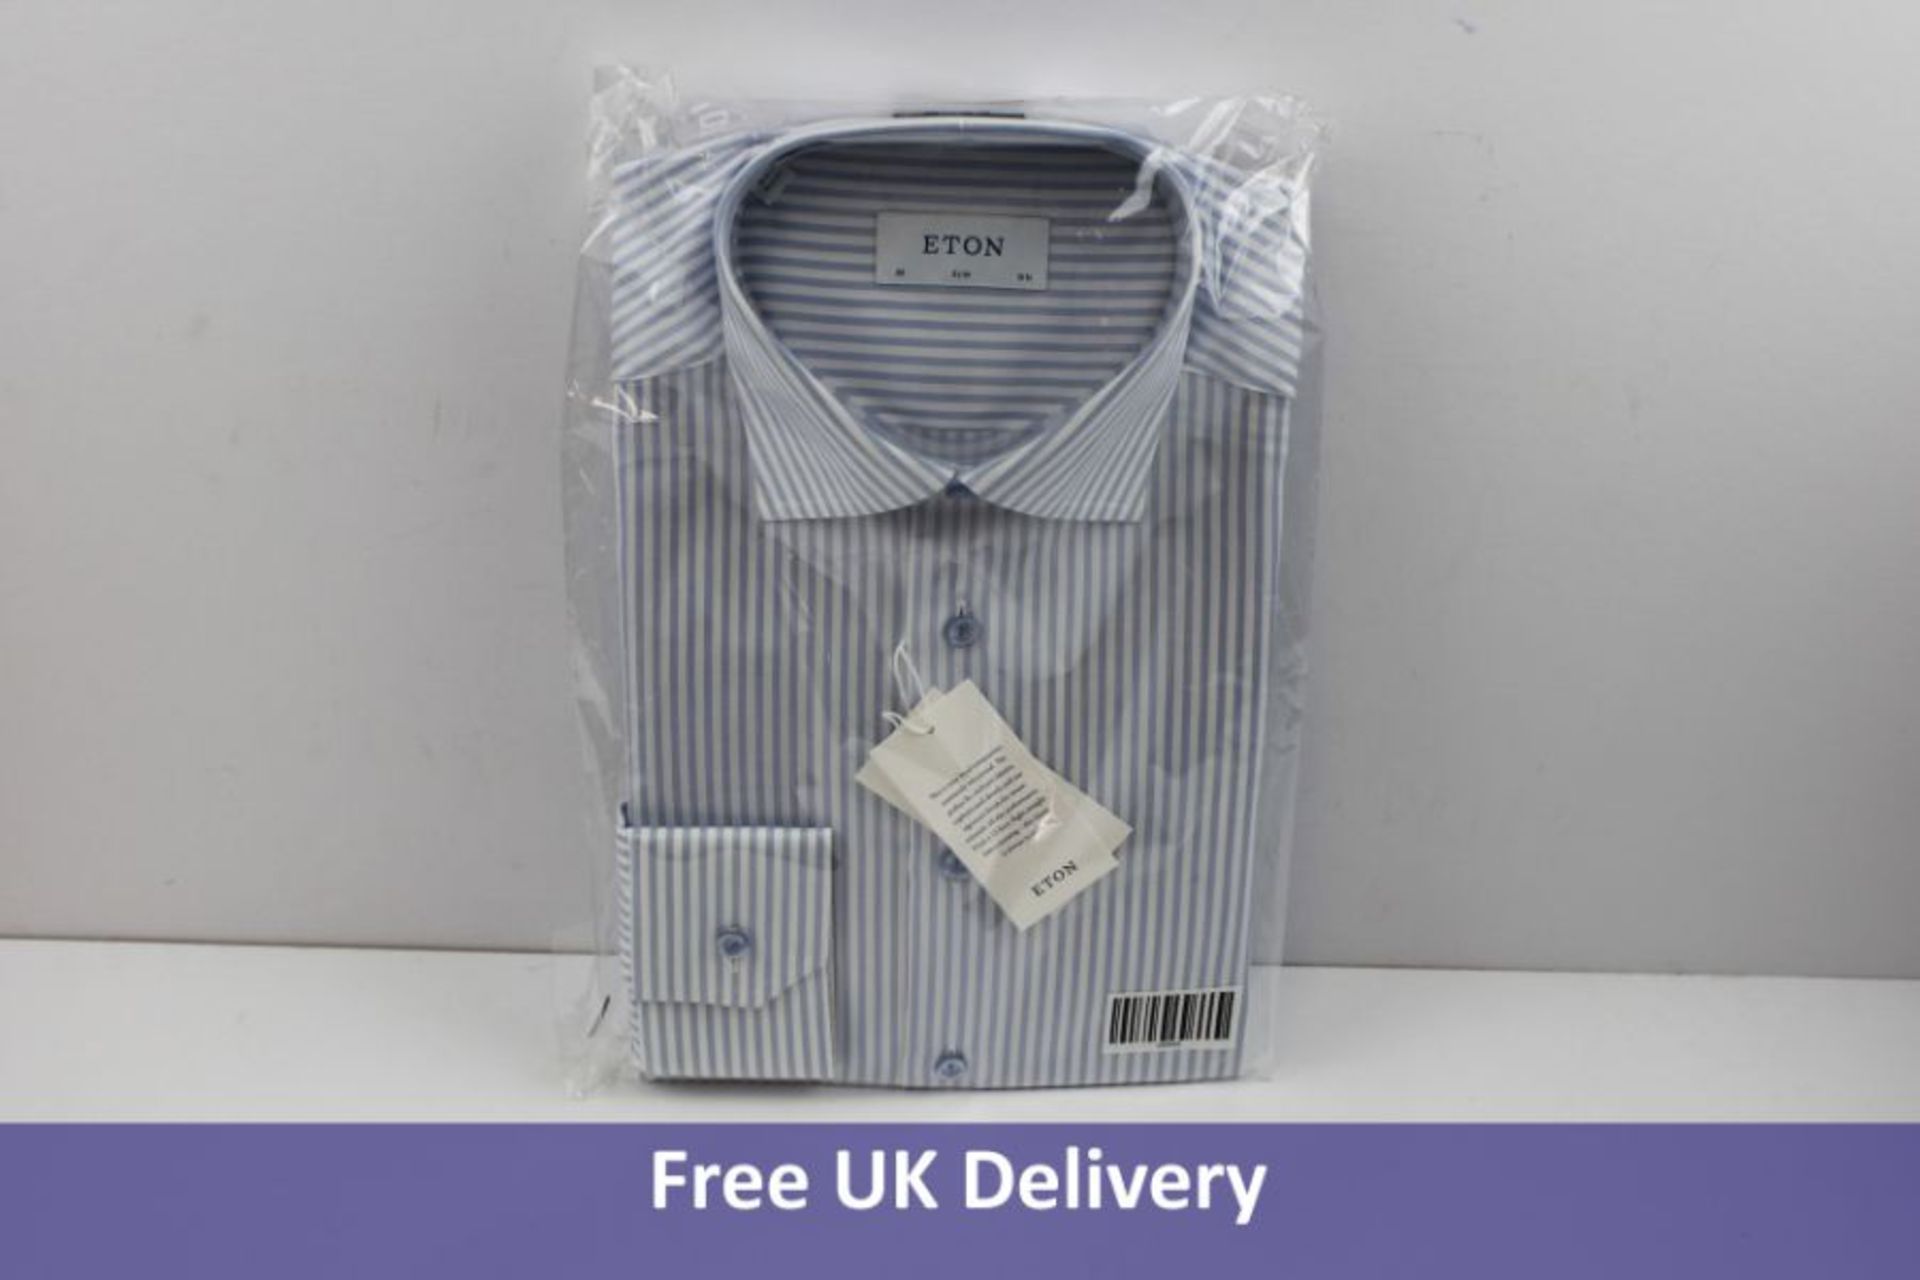 Eton Men's Slim Fit Shirt, Blue Striped, Size 41/16